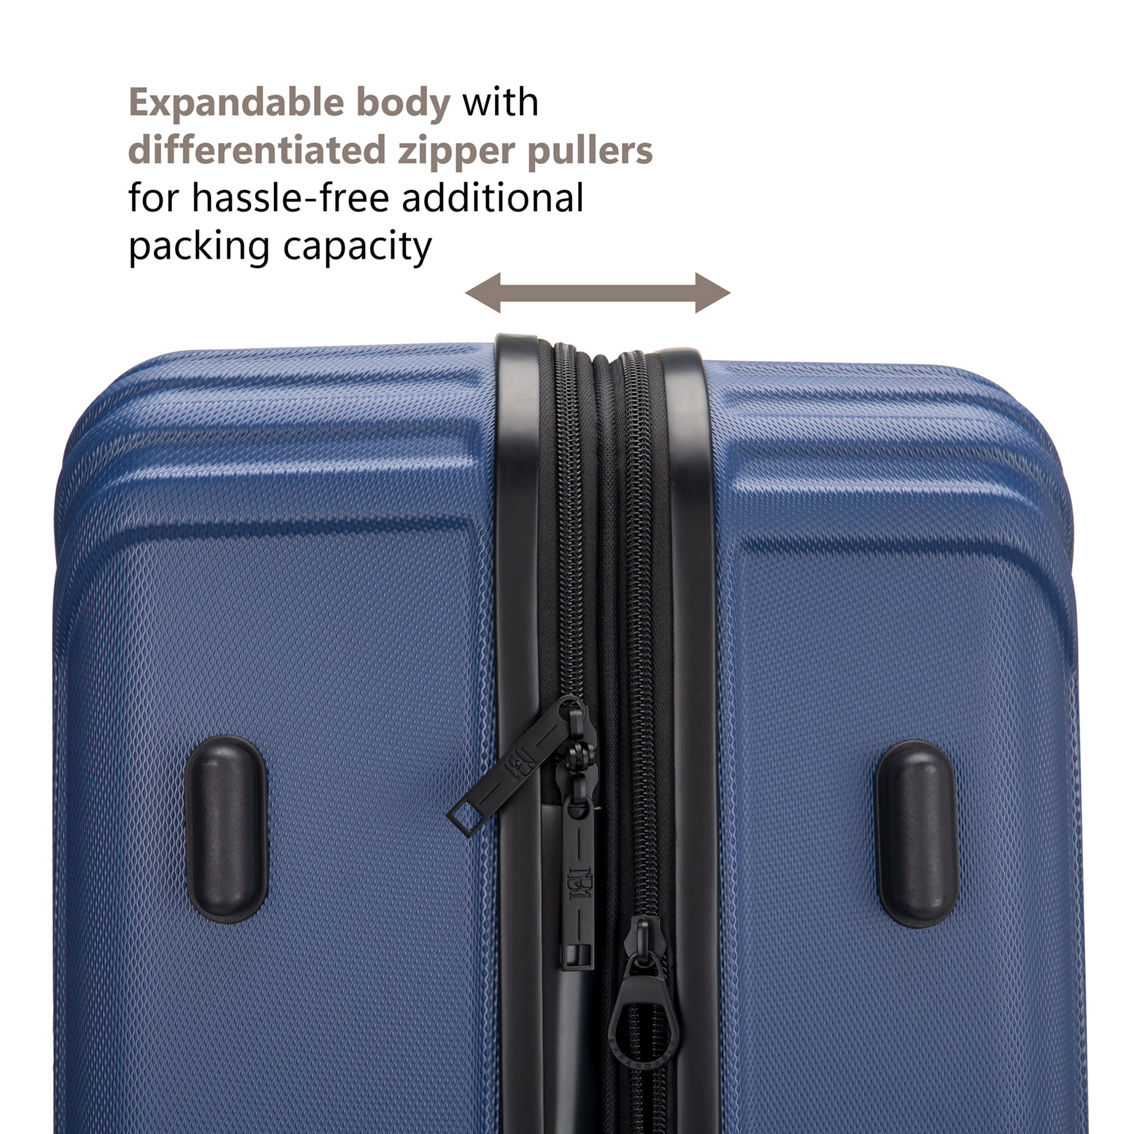 BADGLEY MISCHKA Evalyn 3 Piece Expandable Spinner Luggage Set - Image 4 of 5